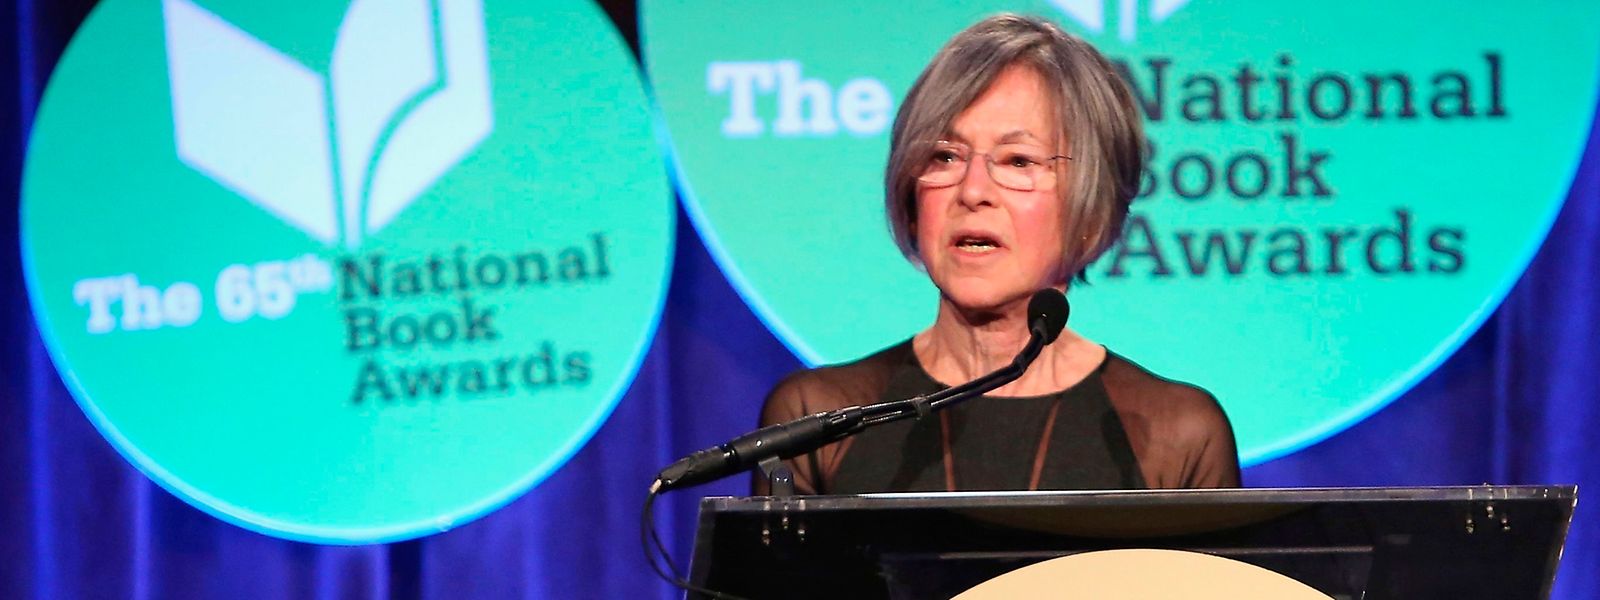 2014 gewann Louise Glück den National Book Award für Lyrik.